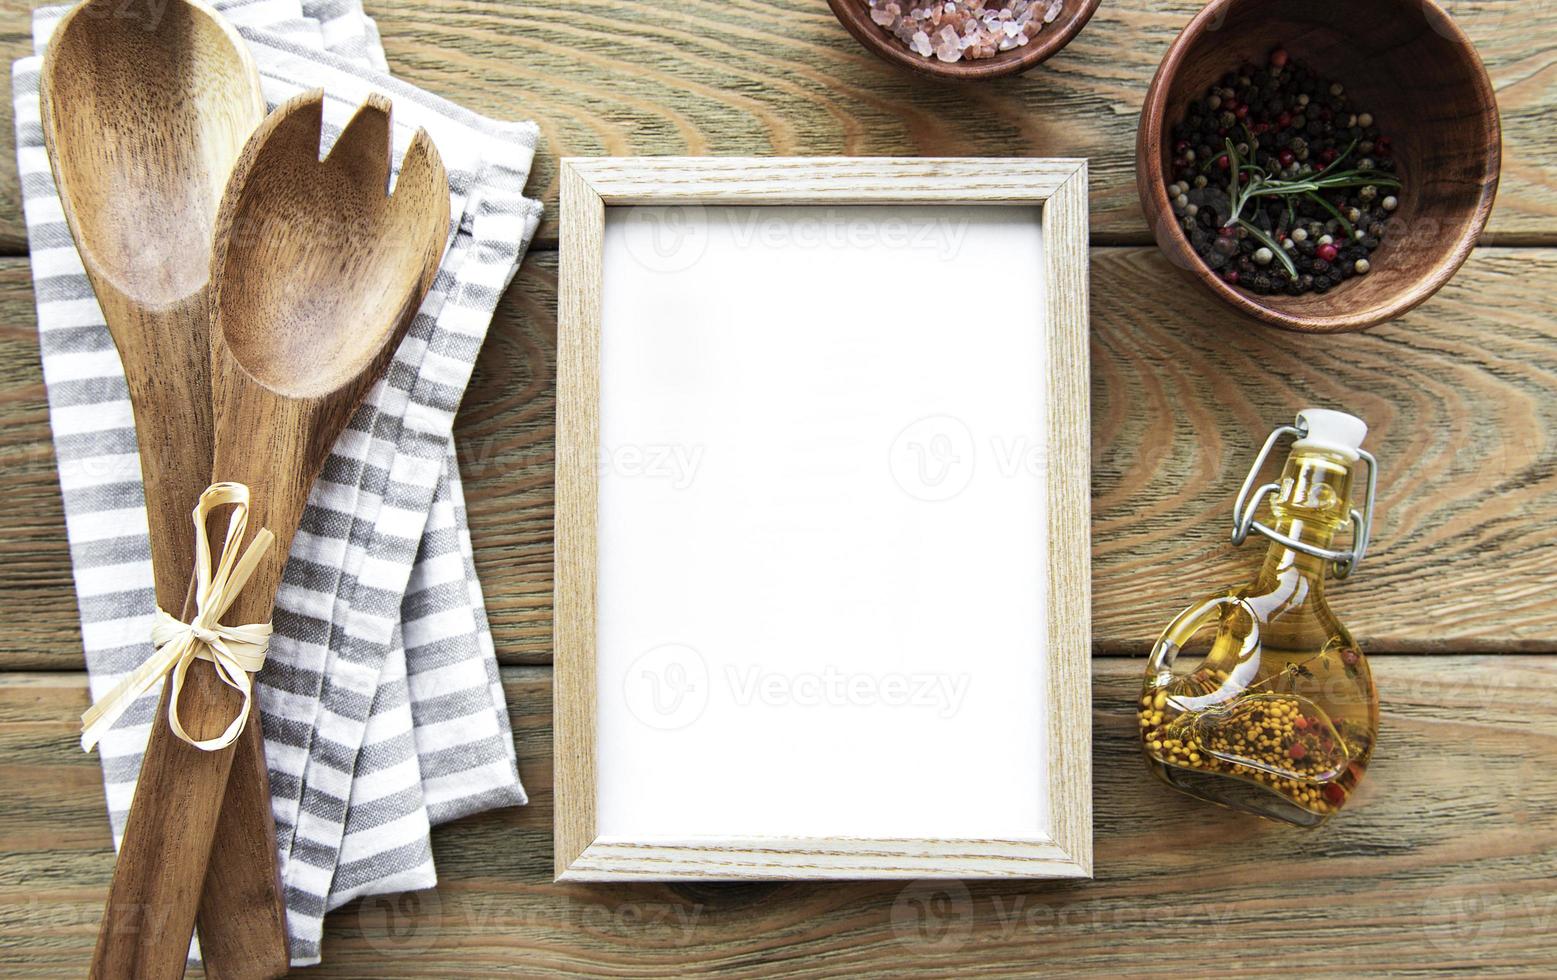 oud houten keukengerei en kruiden met frame als rand foto